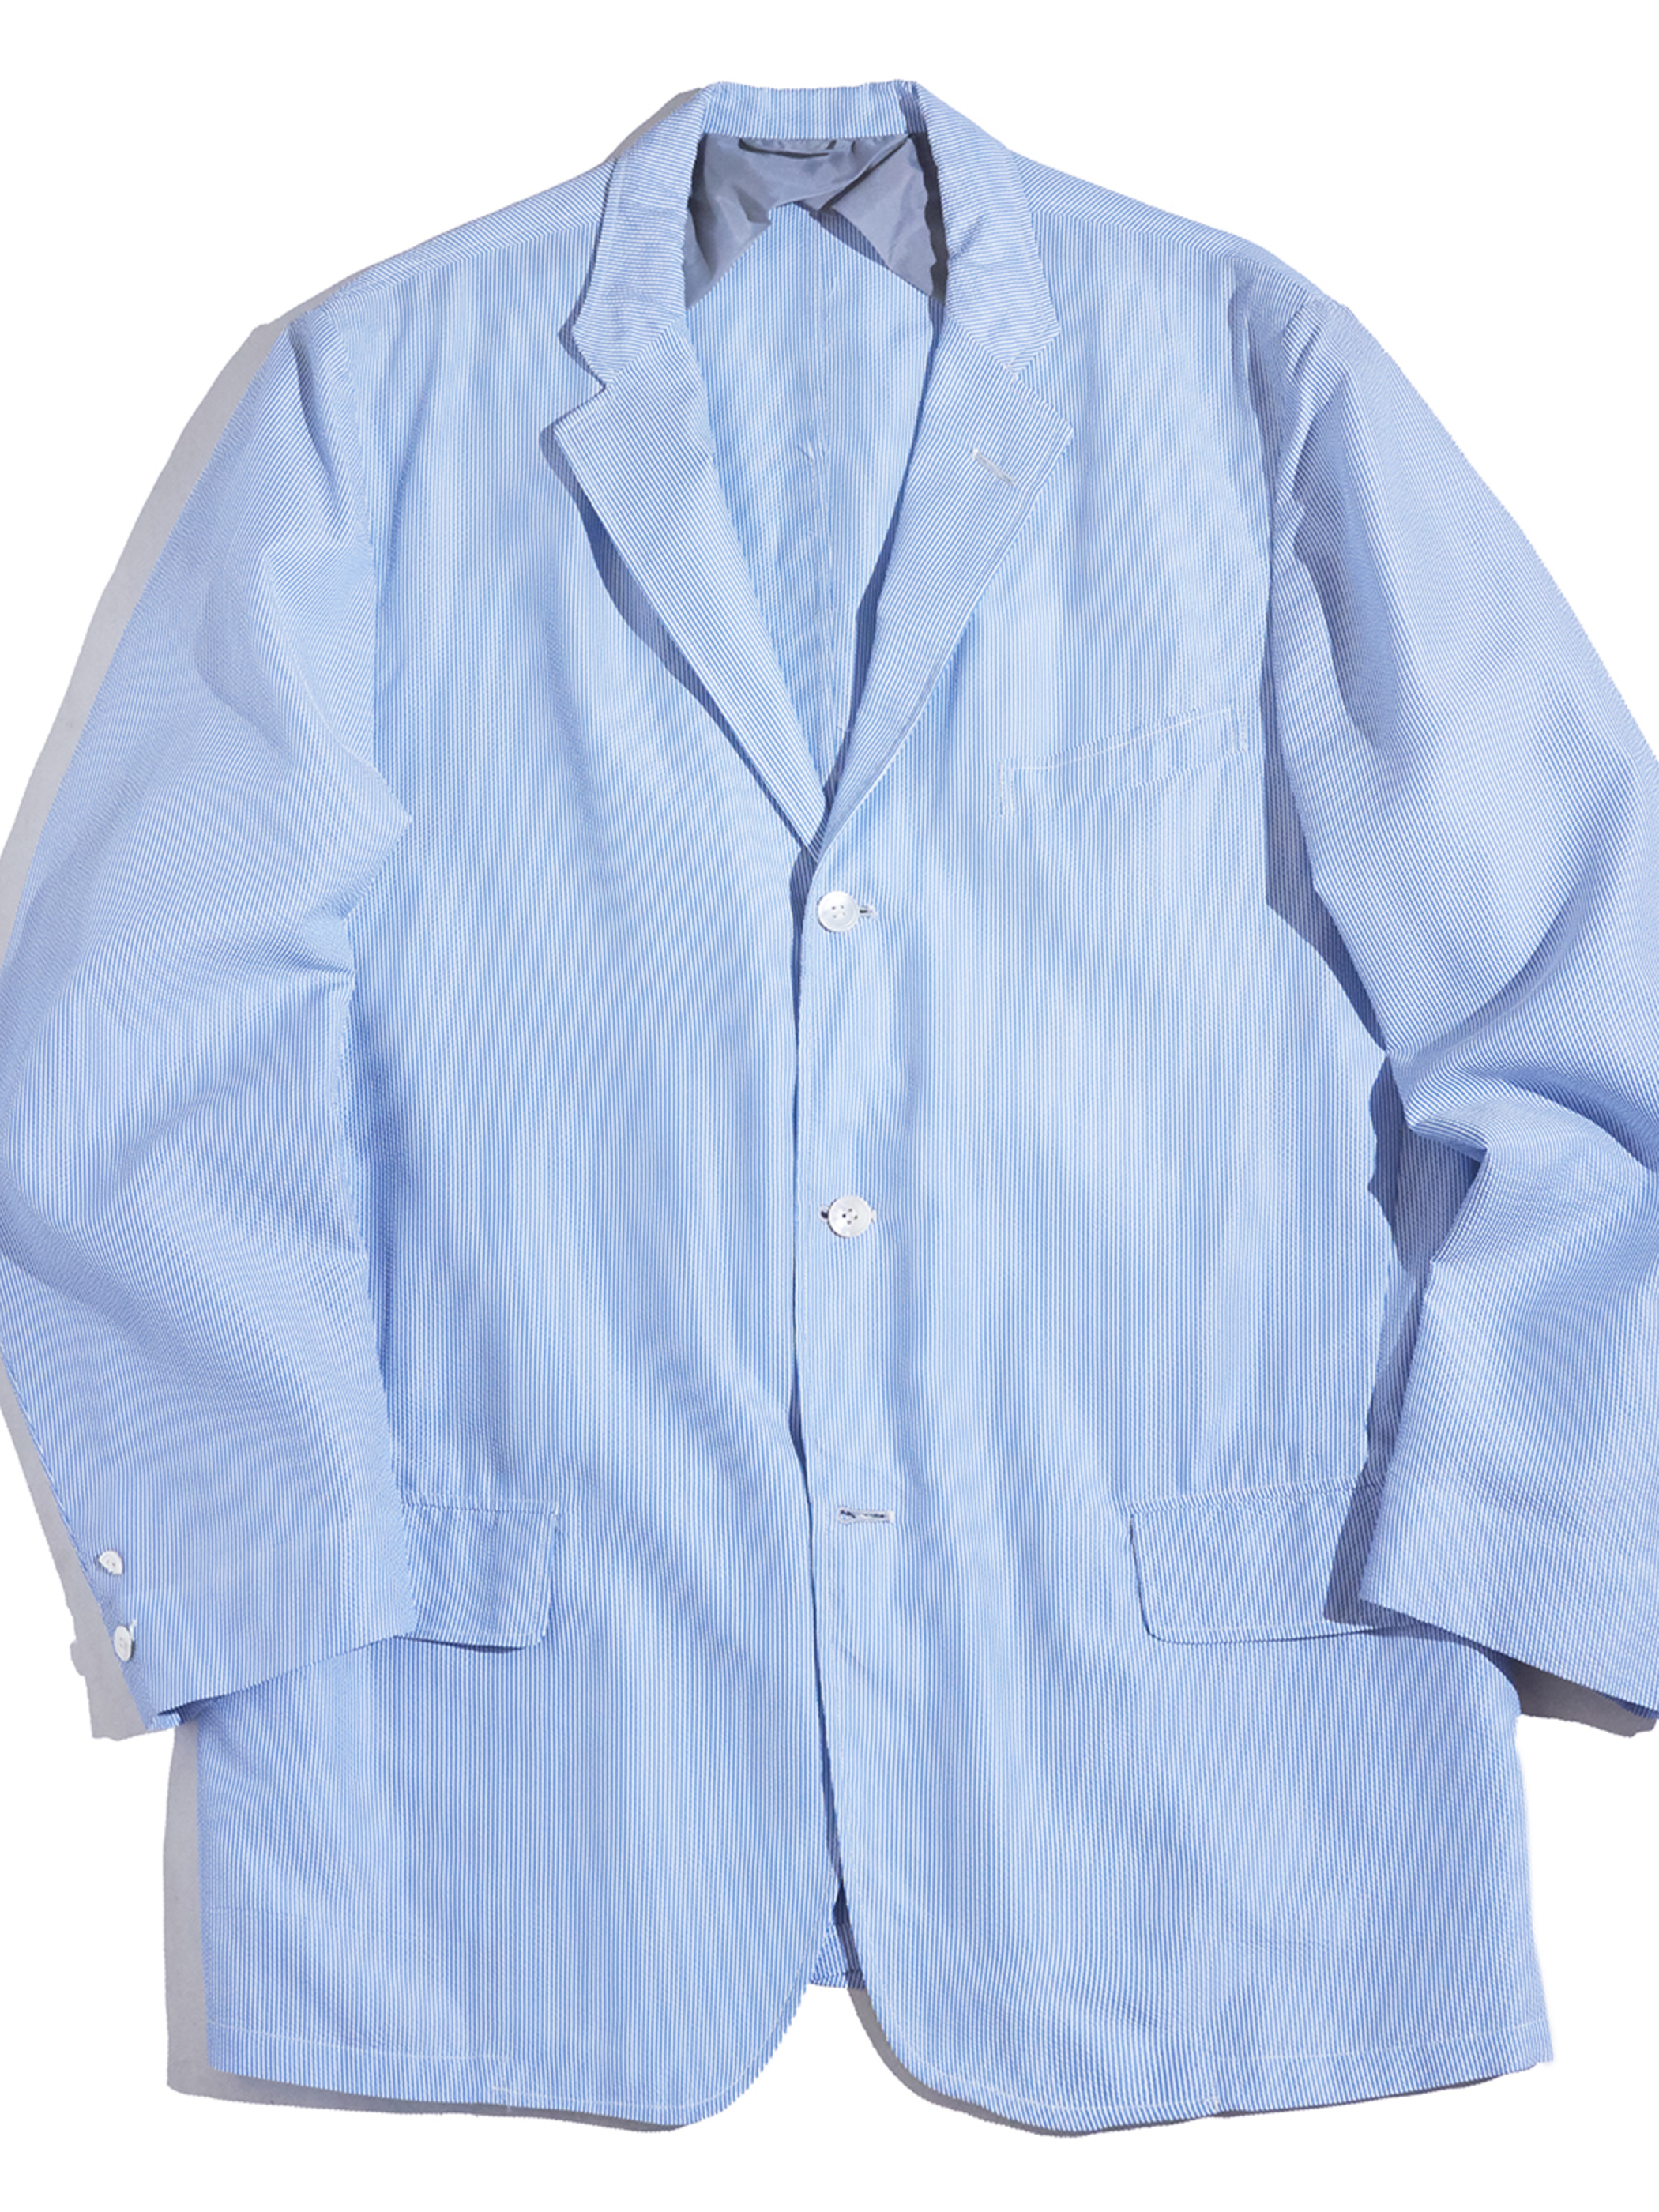 1960s "Andy Anderson Ltd." seersucker stripe tailored jacket -BLUE-